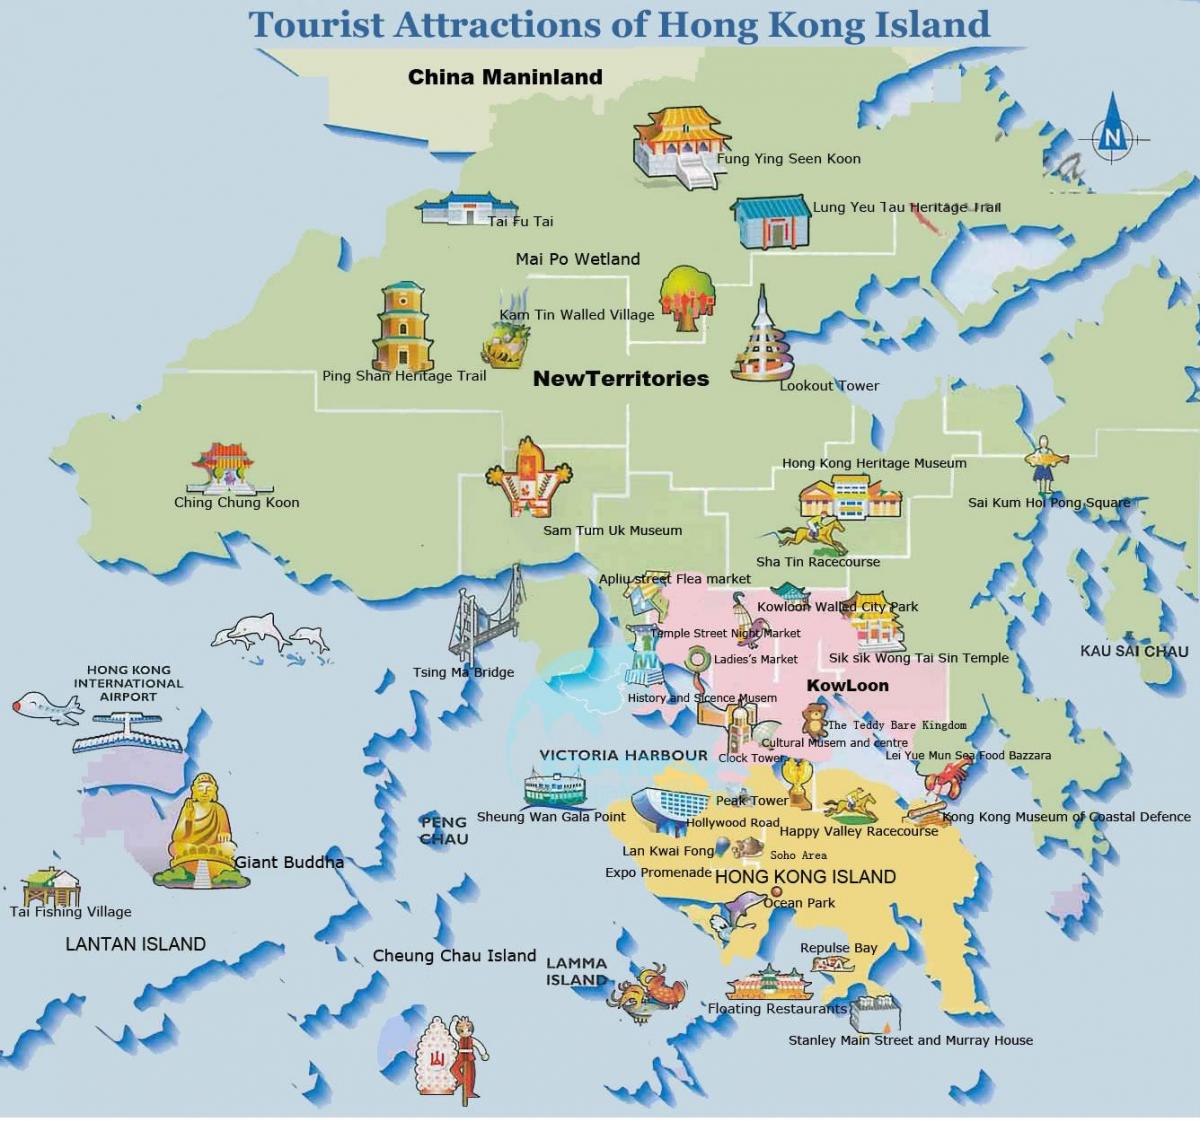 le pic de Hong Kong carte